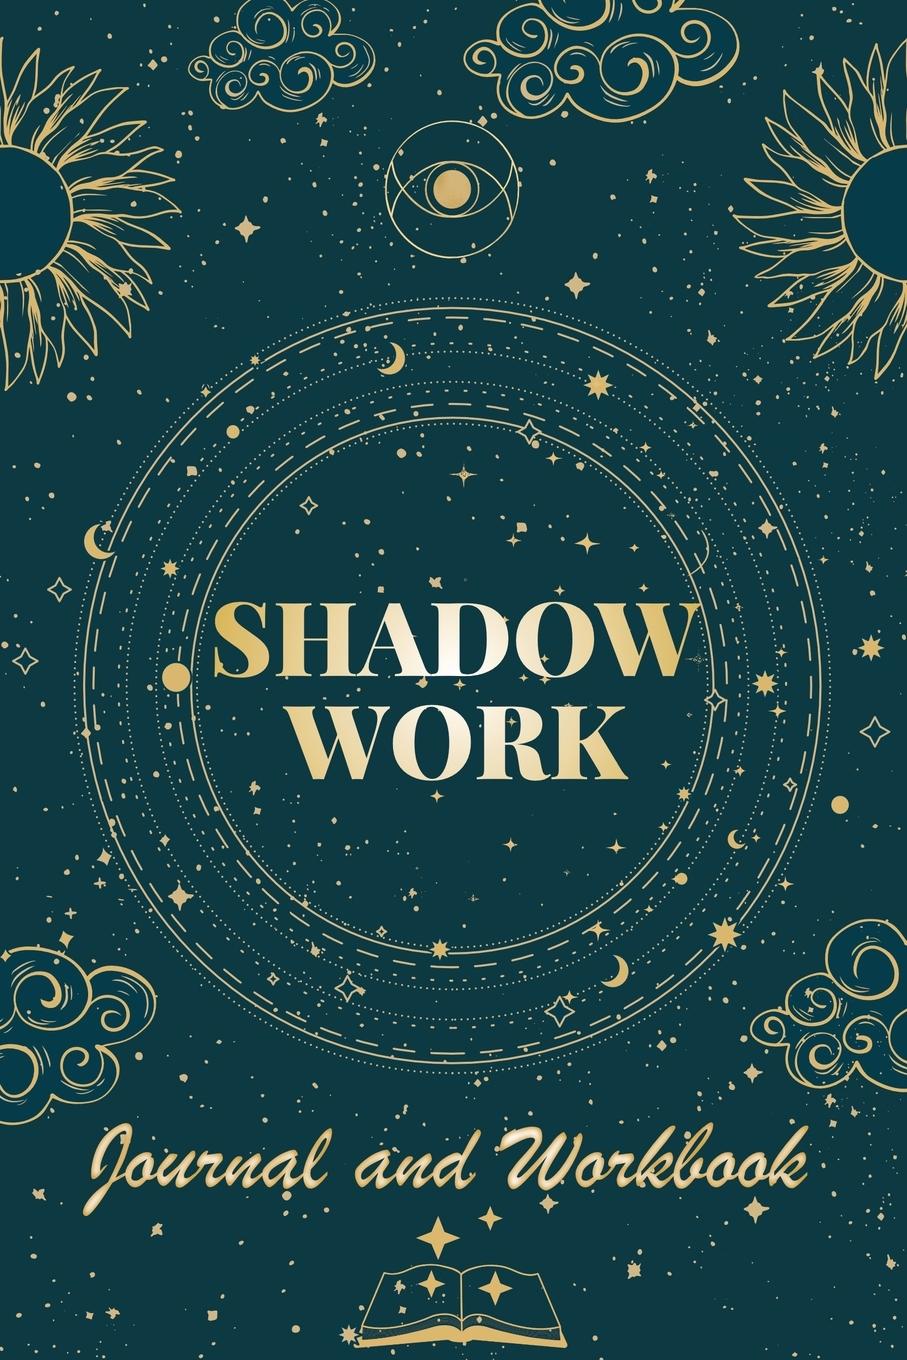 Kniha Shadow Work Journal and Workbook 